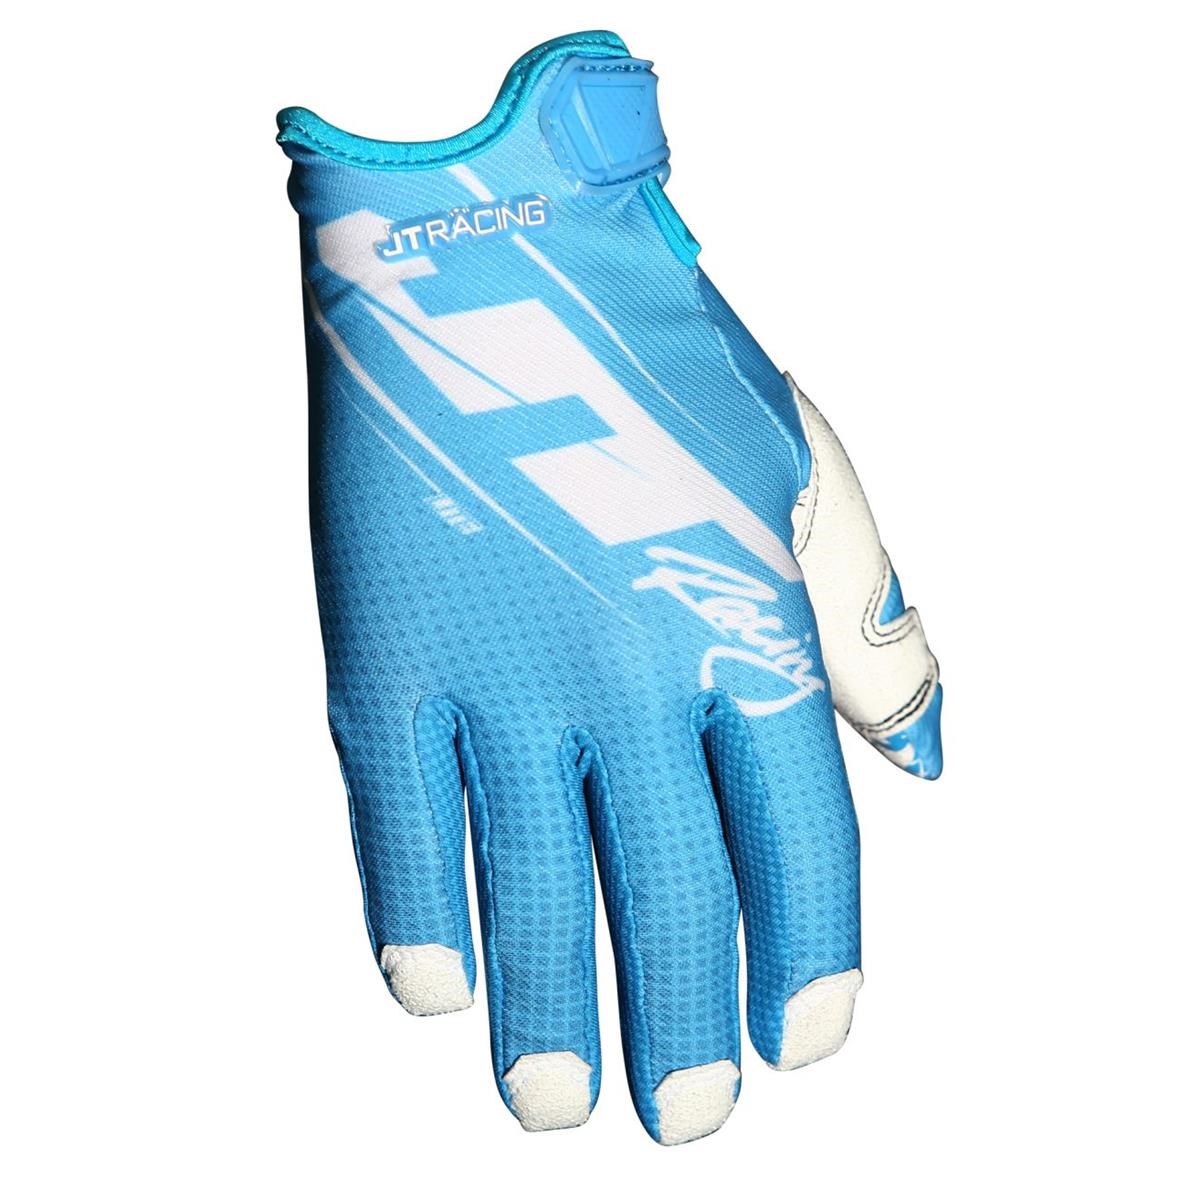 JT Racing USA Gloves Lite Slasher Cyan/White